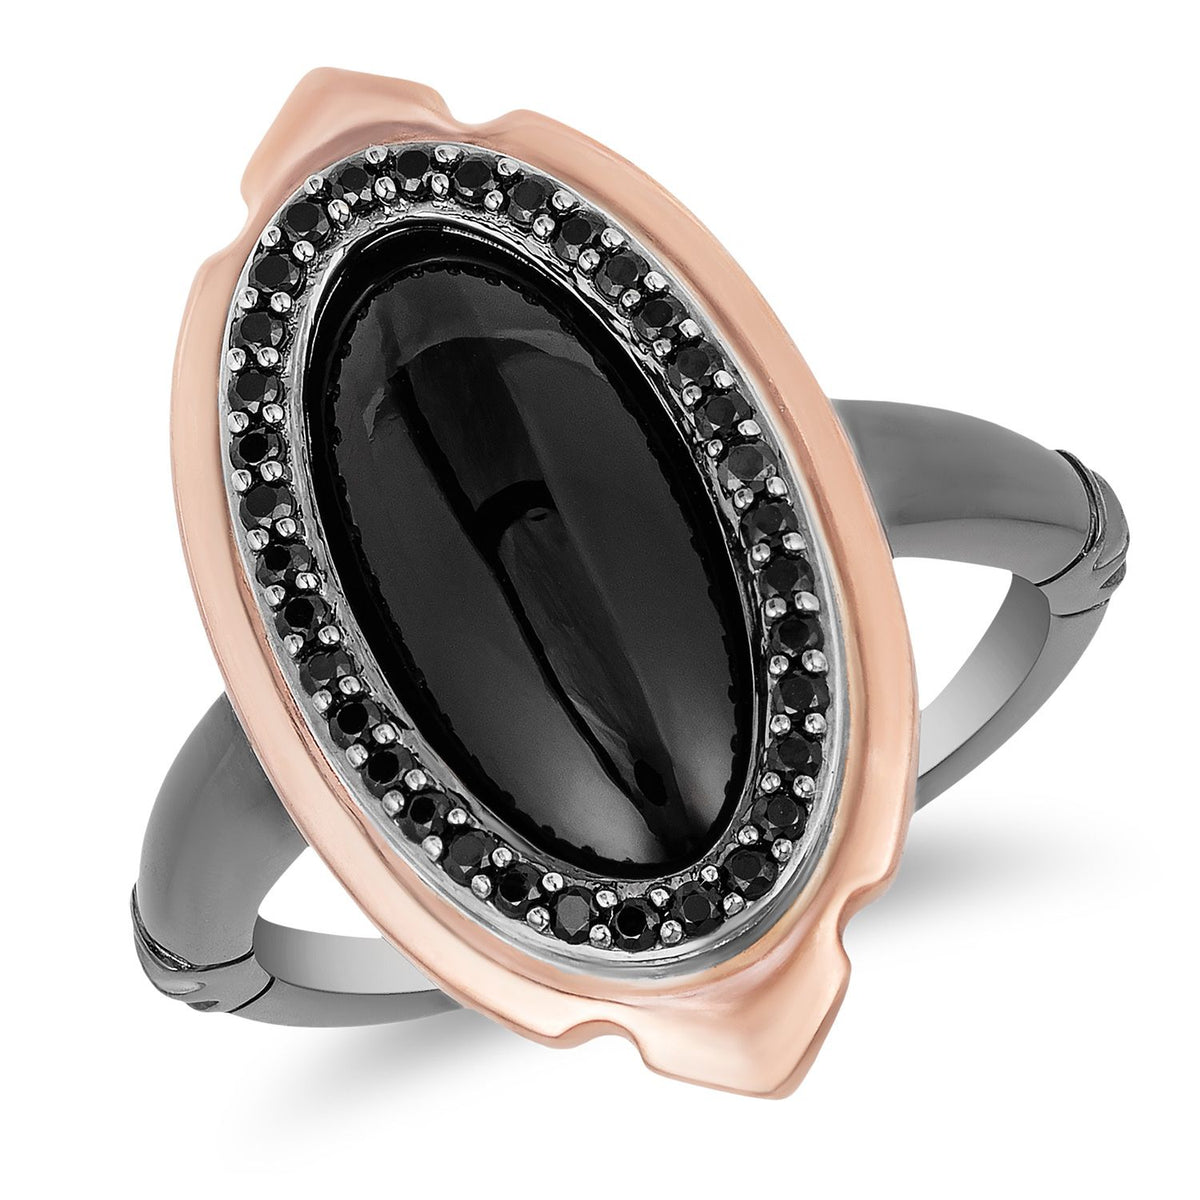 Antique Black Onyx Engagement Ring, Black Onyx Art Deco Engagement Ring,  Unique Black Stone Engagement Ring Set, Black Stone Bridal Ring Set - Etsy  | Black onyx engagement ring, Black stone ring